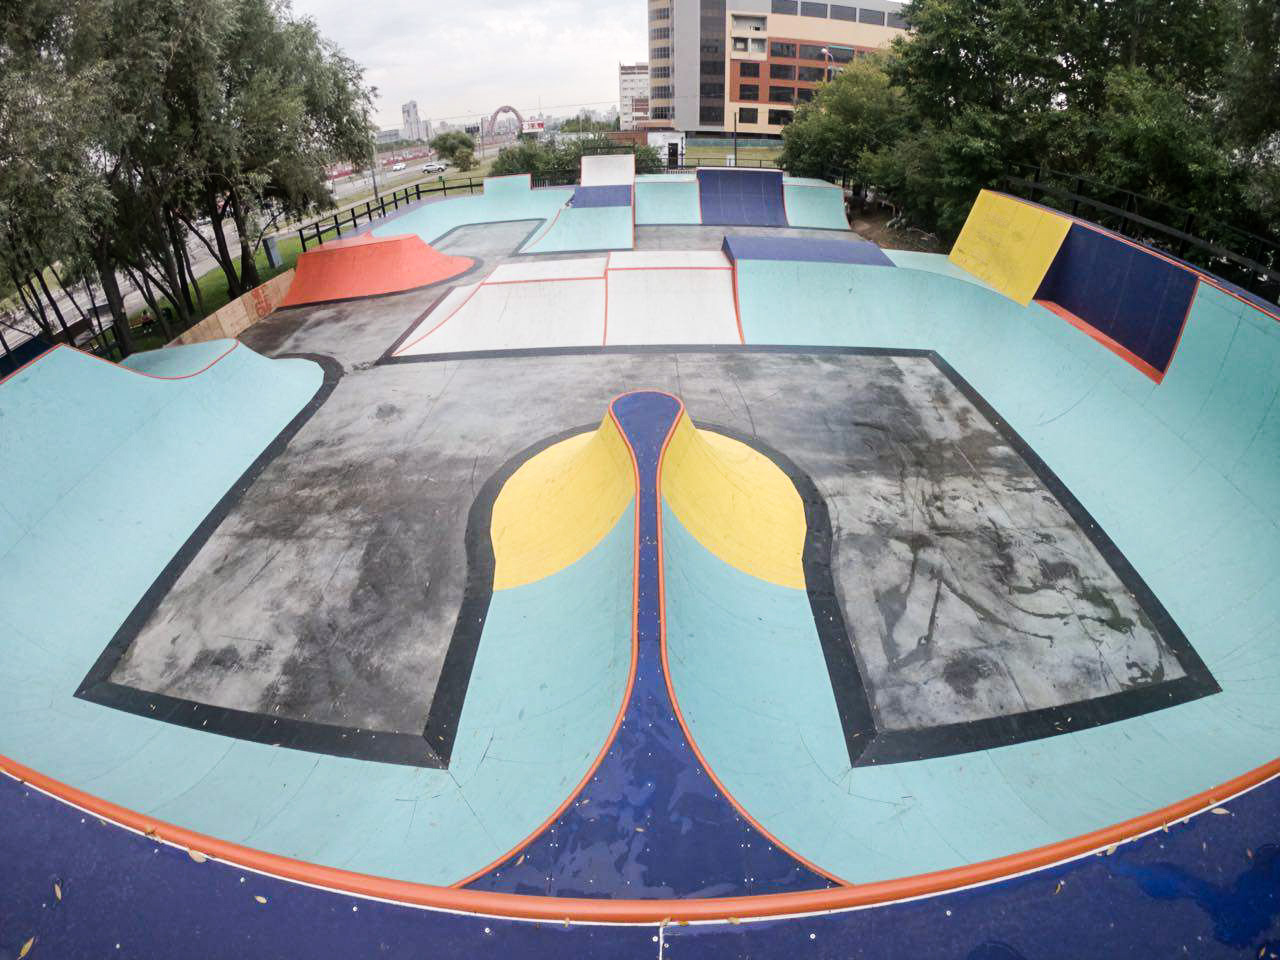 Обзор скейт-парка XSA ramps в Москве